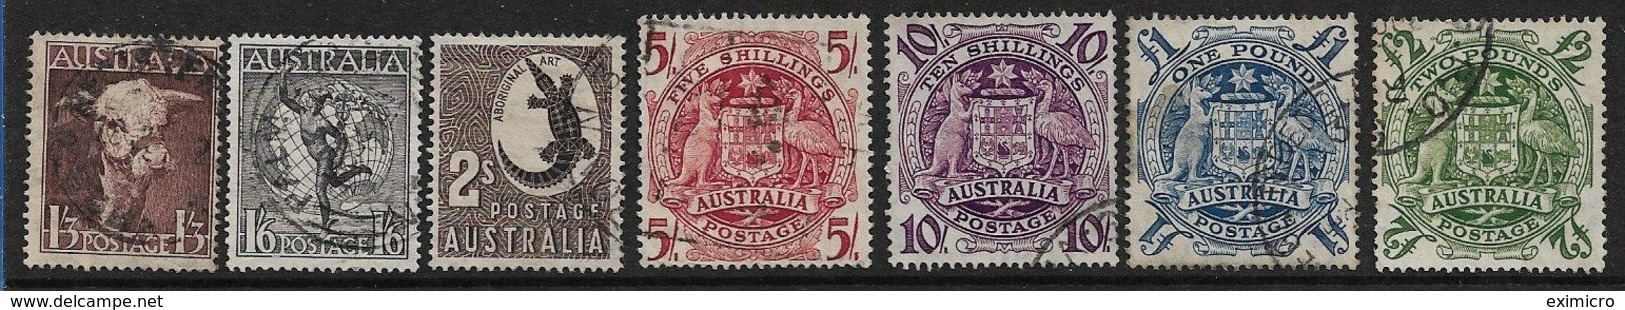 AUSTRALIA 1948 - 1950 SET SG 223/224d FINE USED Cat £21 - Used Stamps